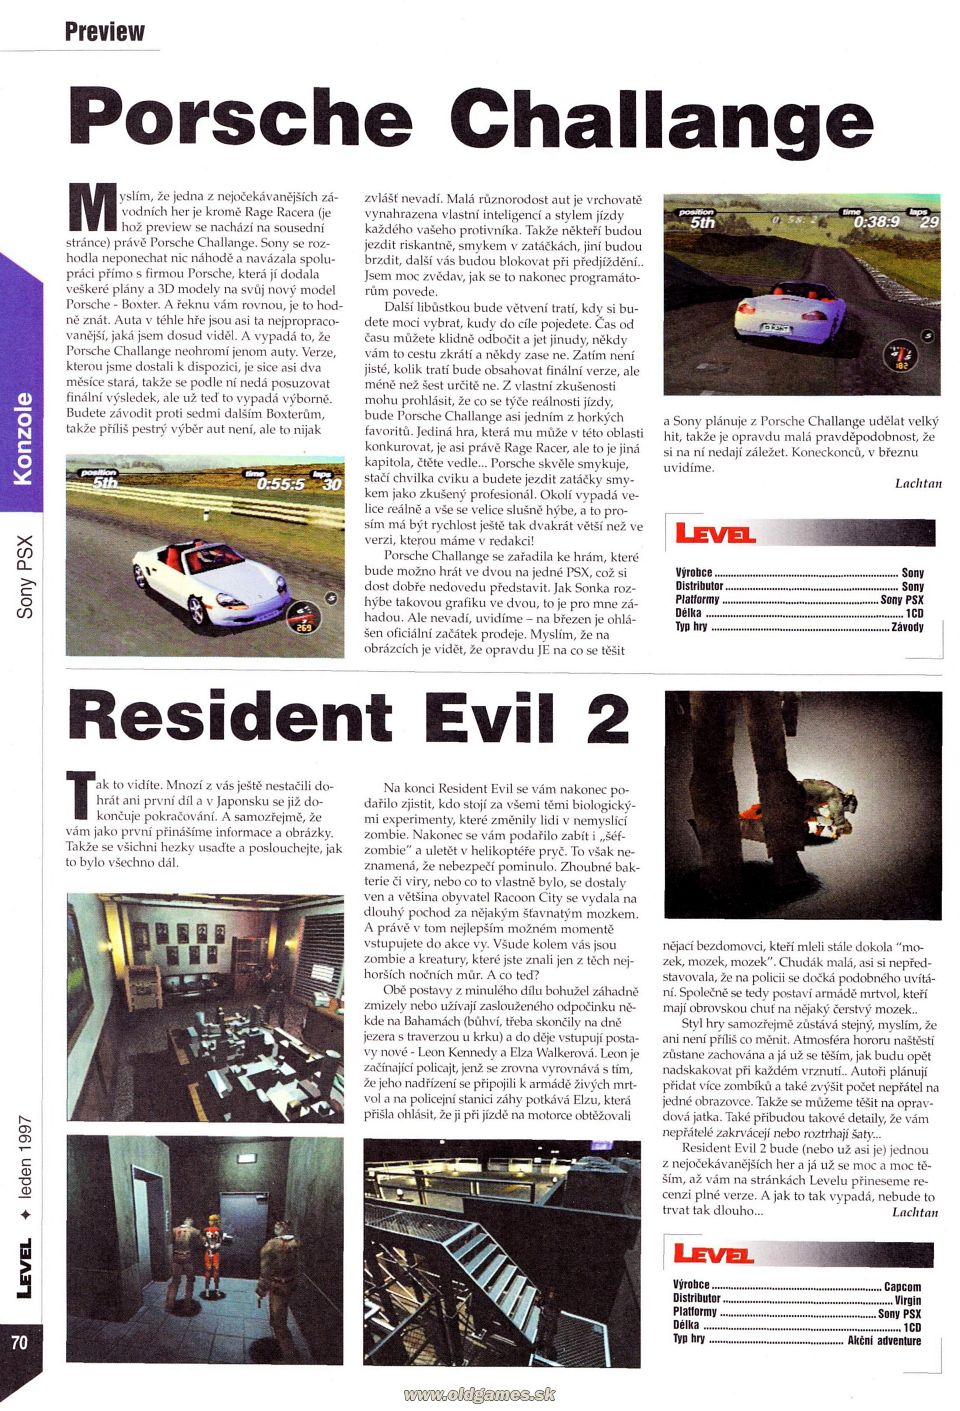 Preview: Porsche Challenge, Resident Evil 2